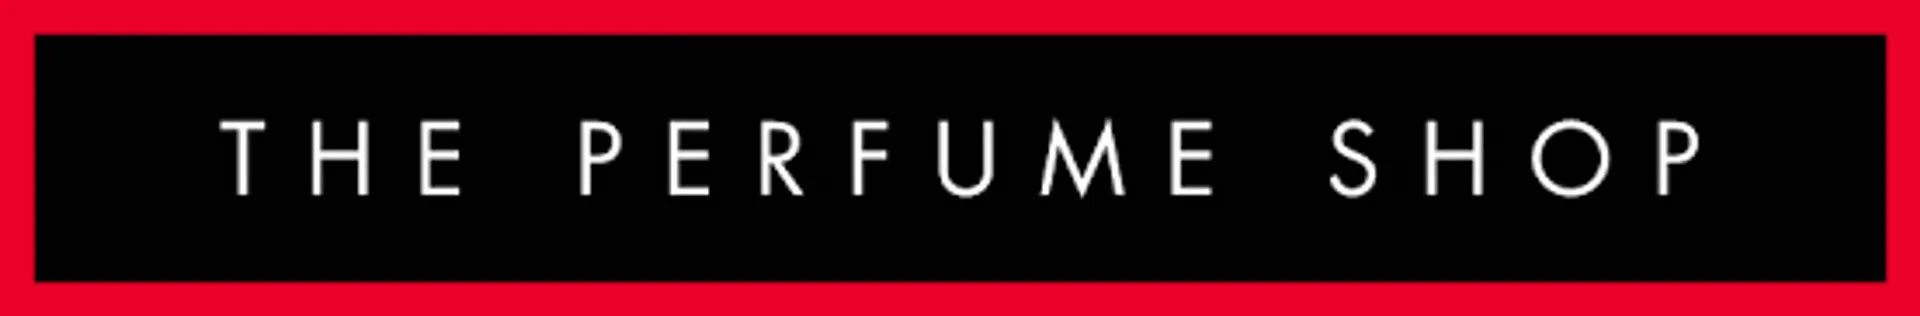 THE PERFUME SHOP logo